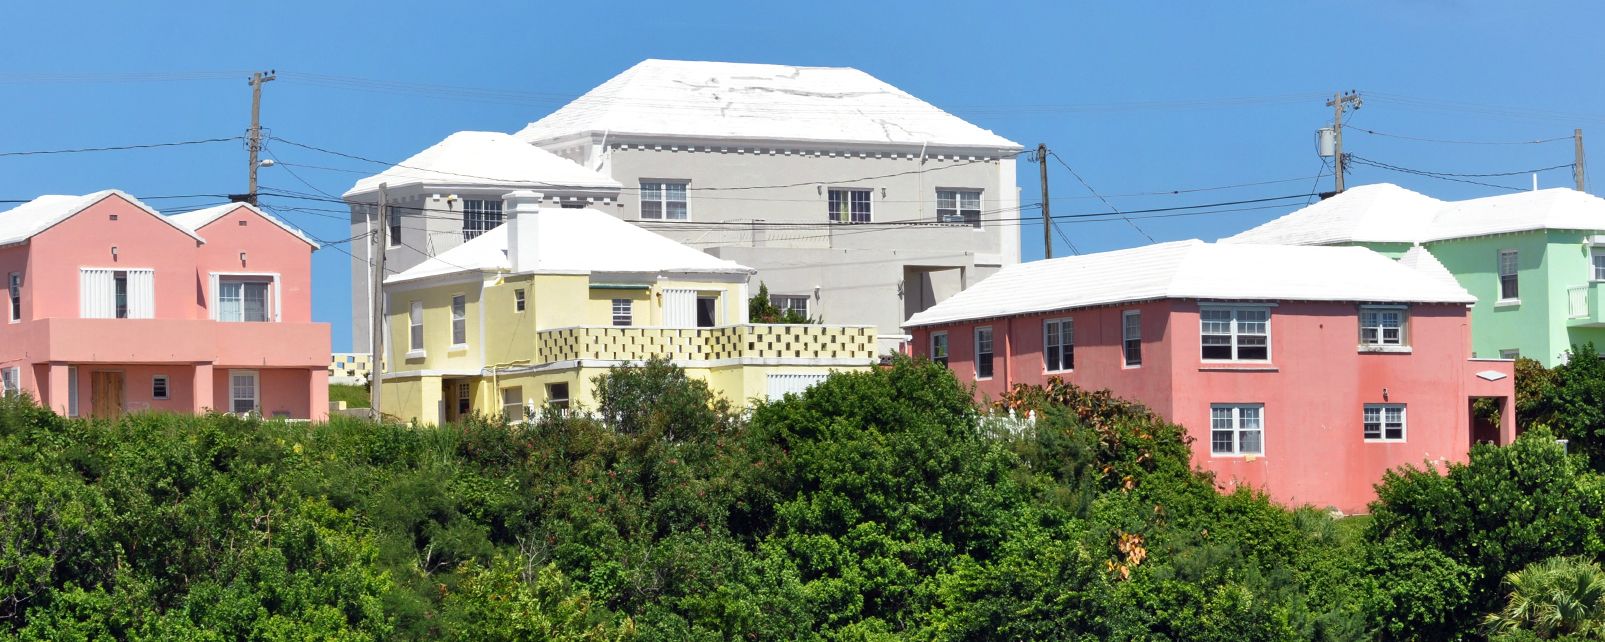 St George, Bermudas